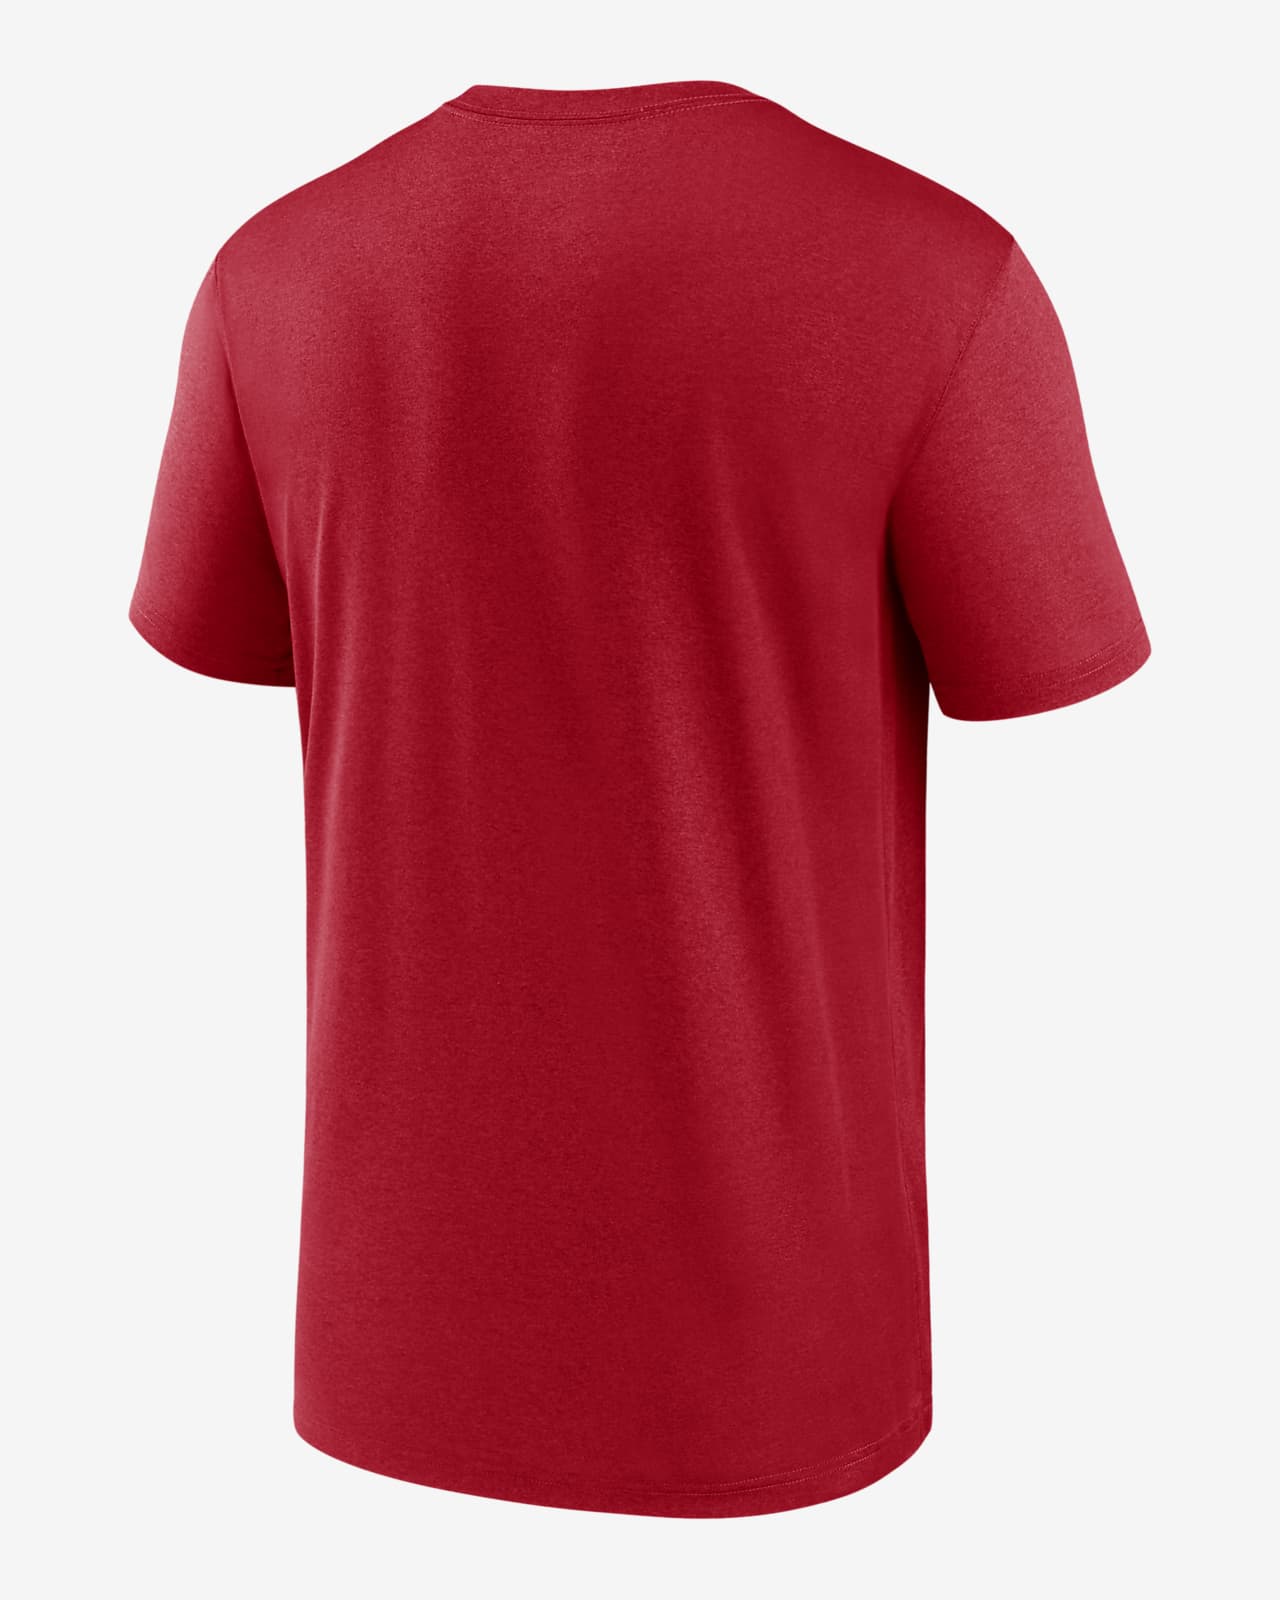 Nike Team Wordmark MLB Full Button Jersey